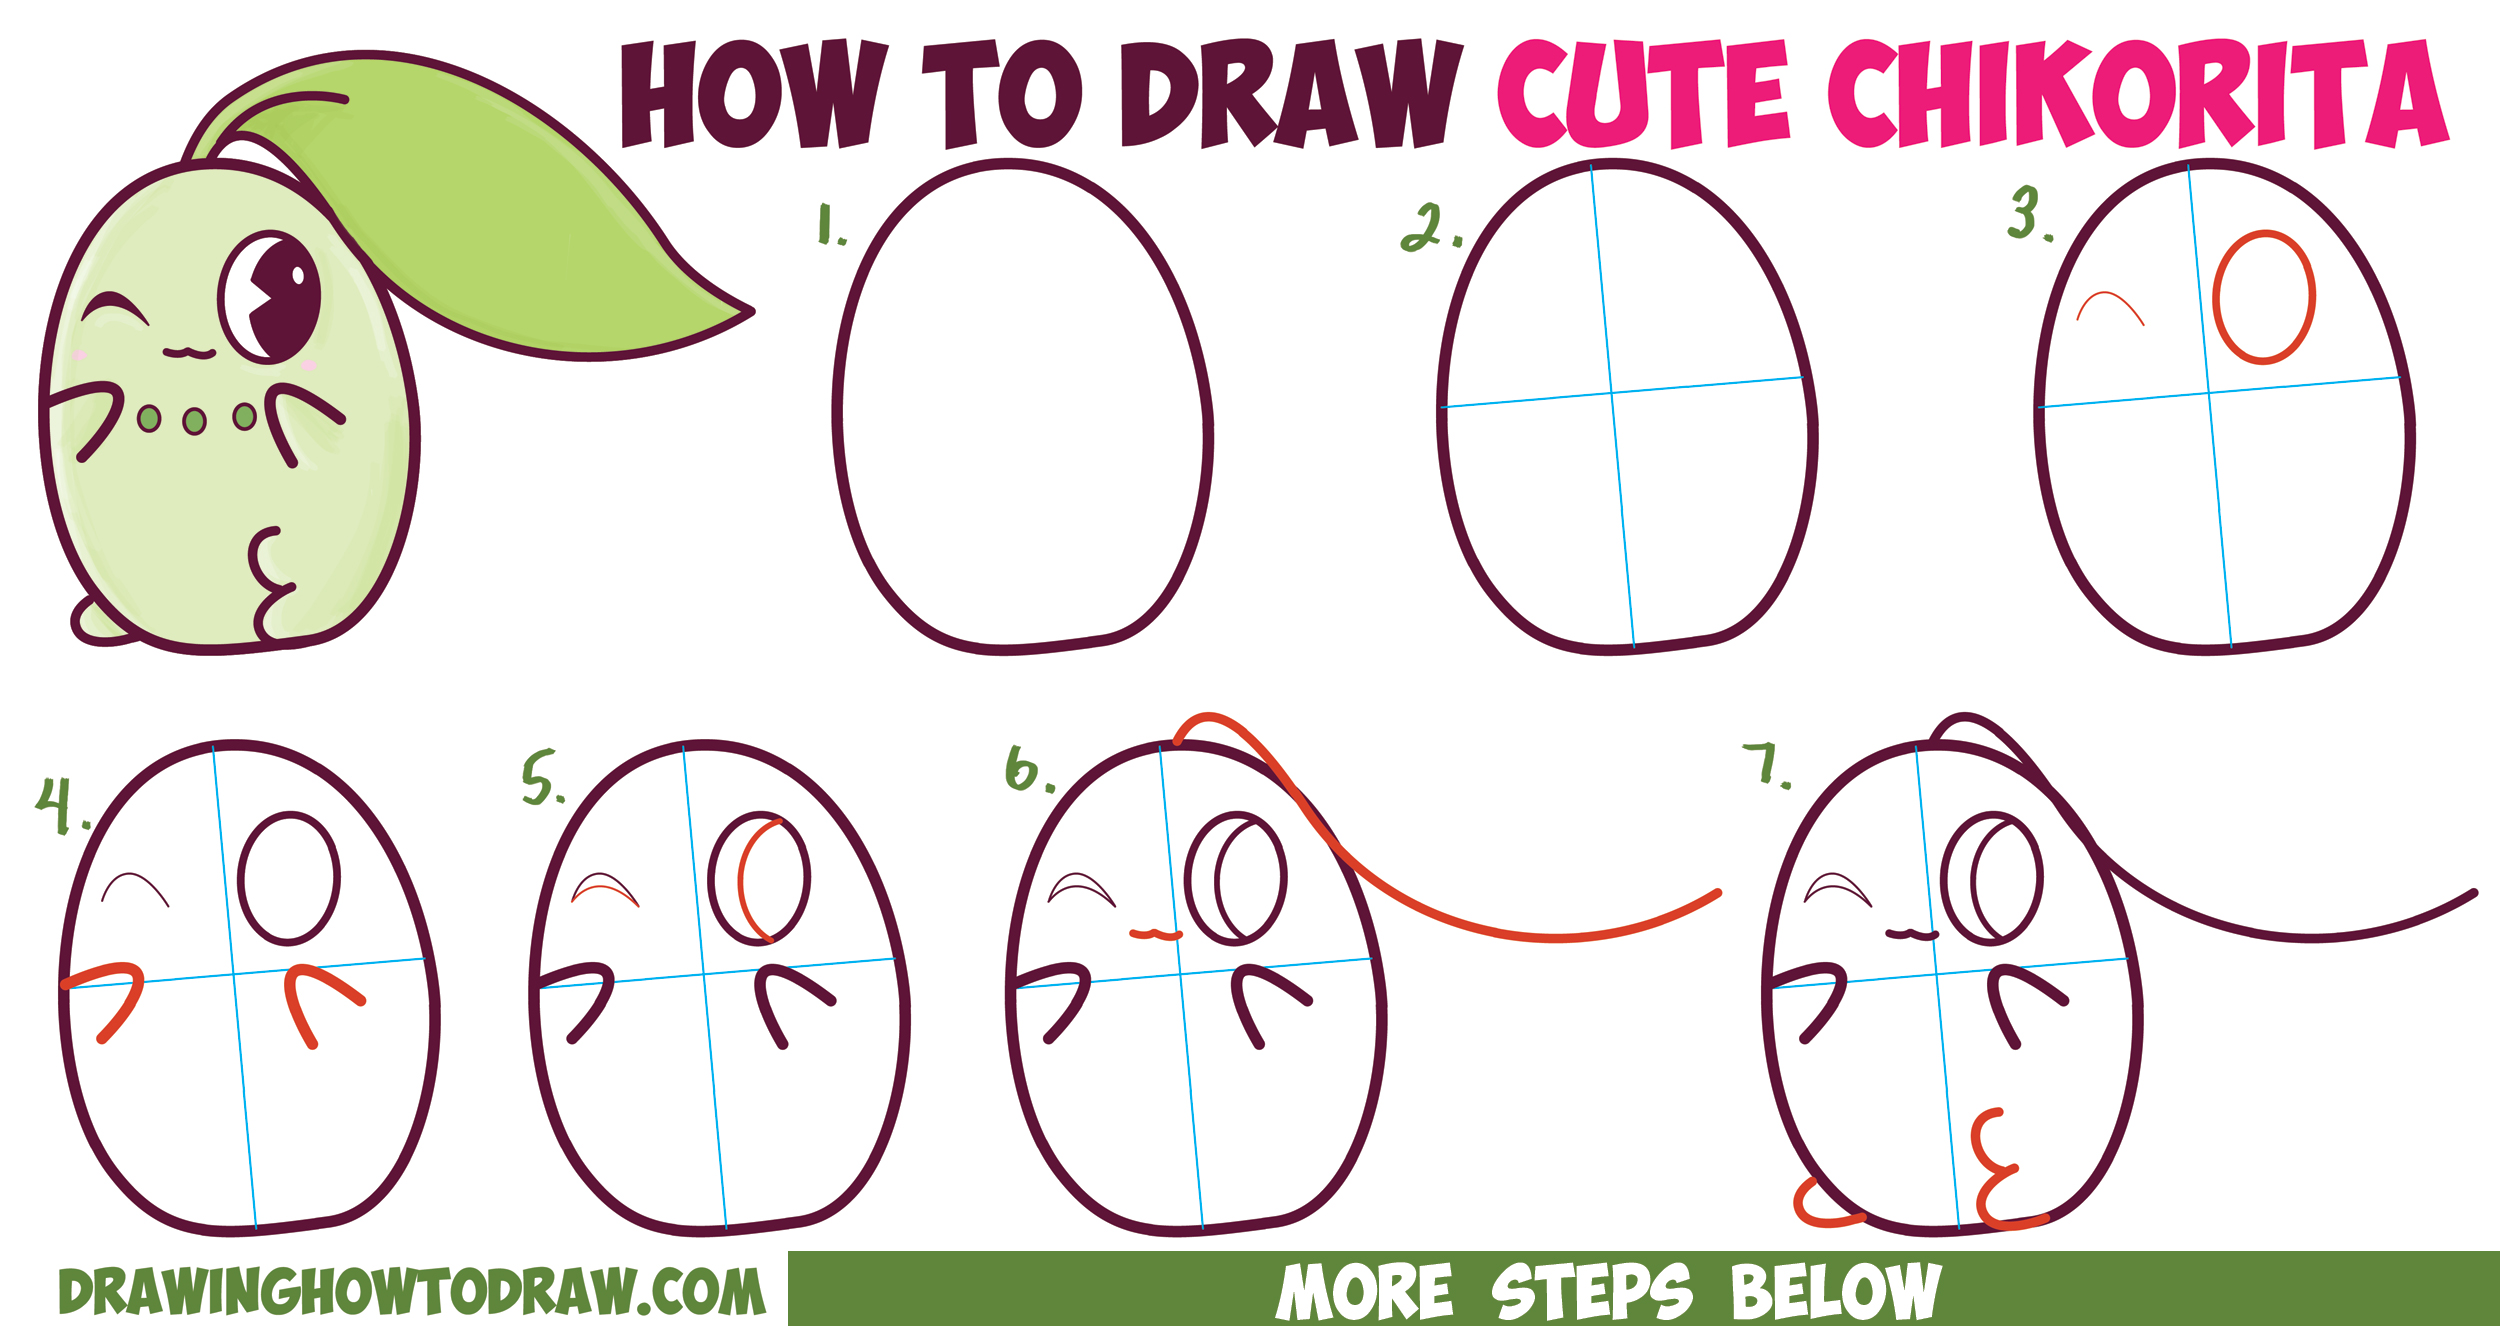 How to Draw Cute / Kawaii / Chibi Chikorita from Pokemon in Easy ...